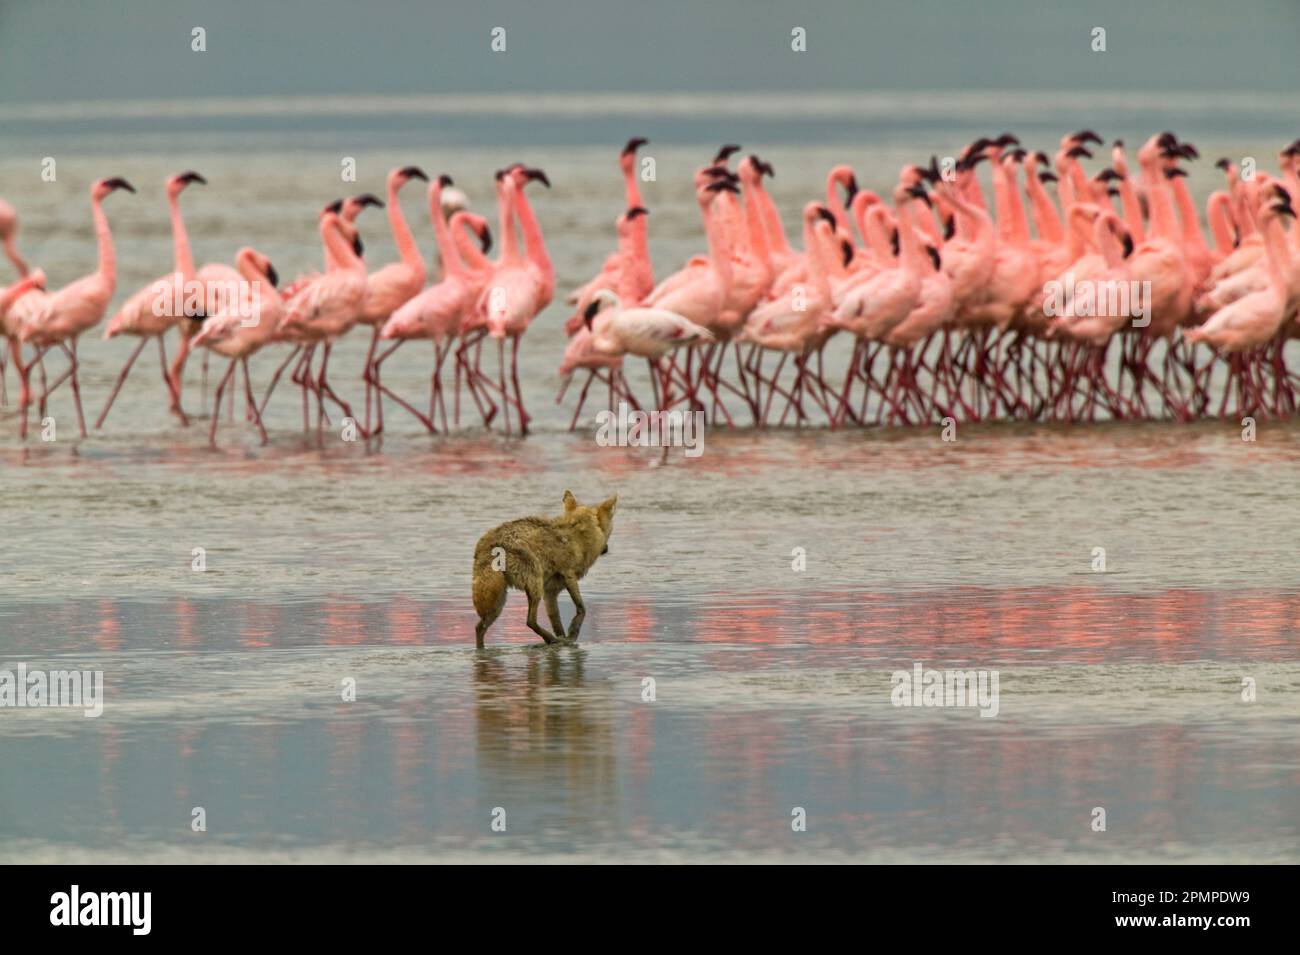 Coyote (Canis latrans) stalks flamingos on the shore of Lake Magadi; Ngorongoro Crater, Tanzania Stock Photo